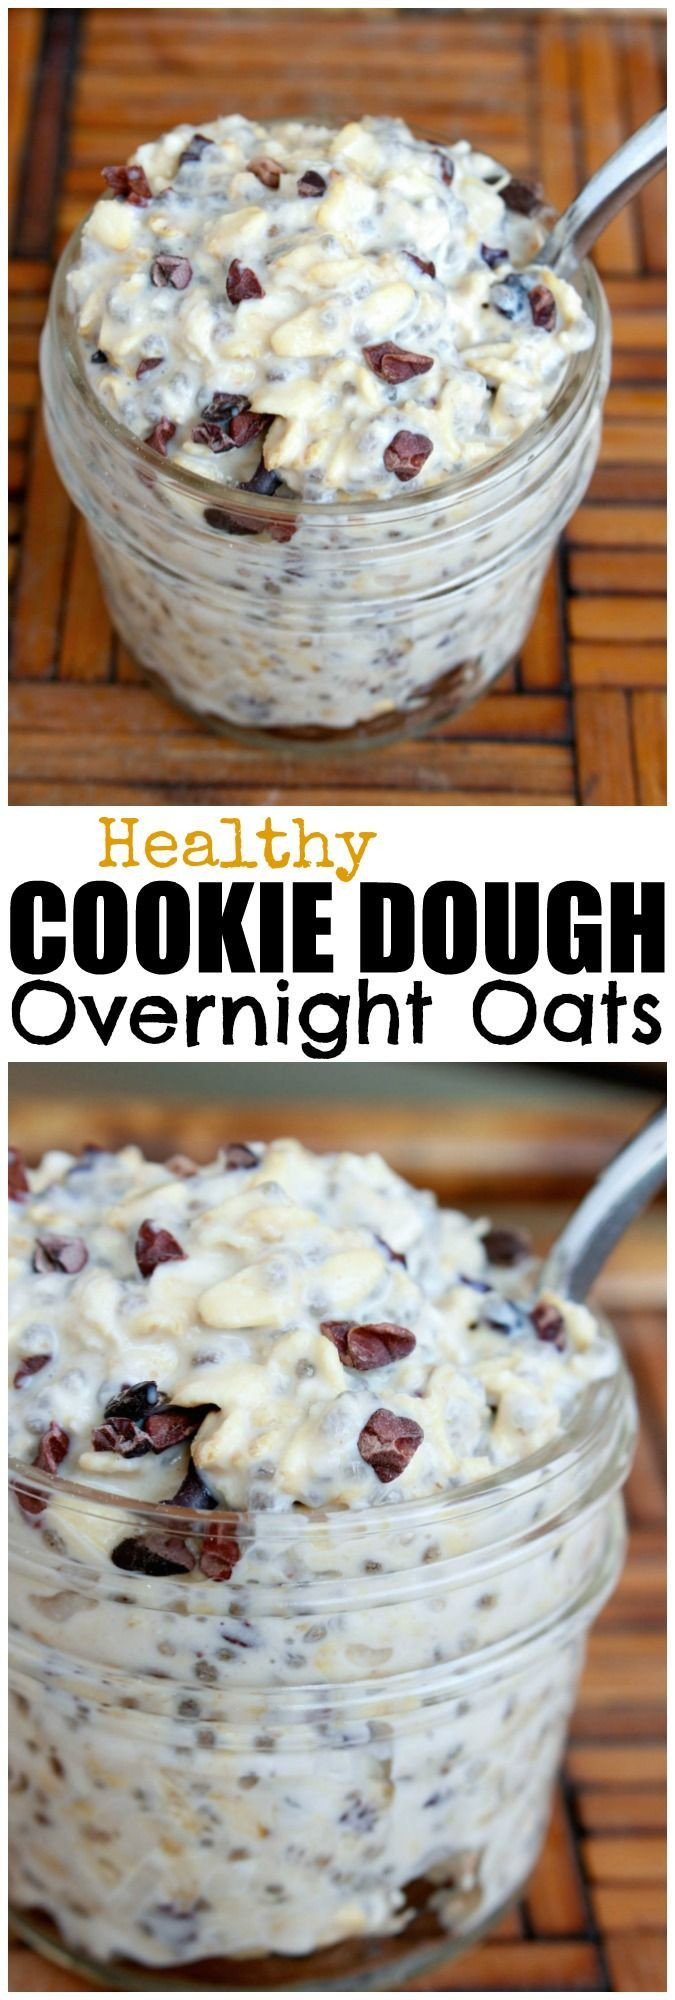 Healthy Overnight Oats Recipe
 Best 25 Healthy overnight oats ideas on Pinterest